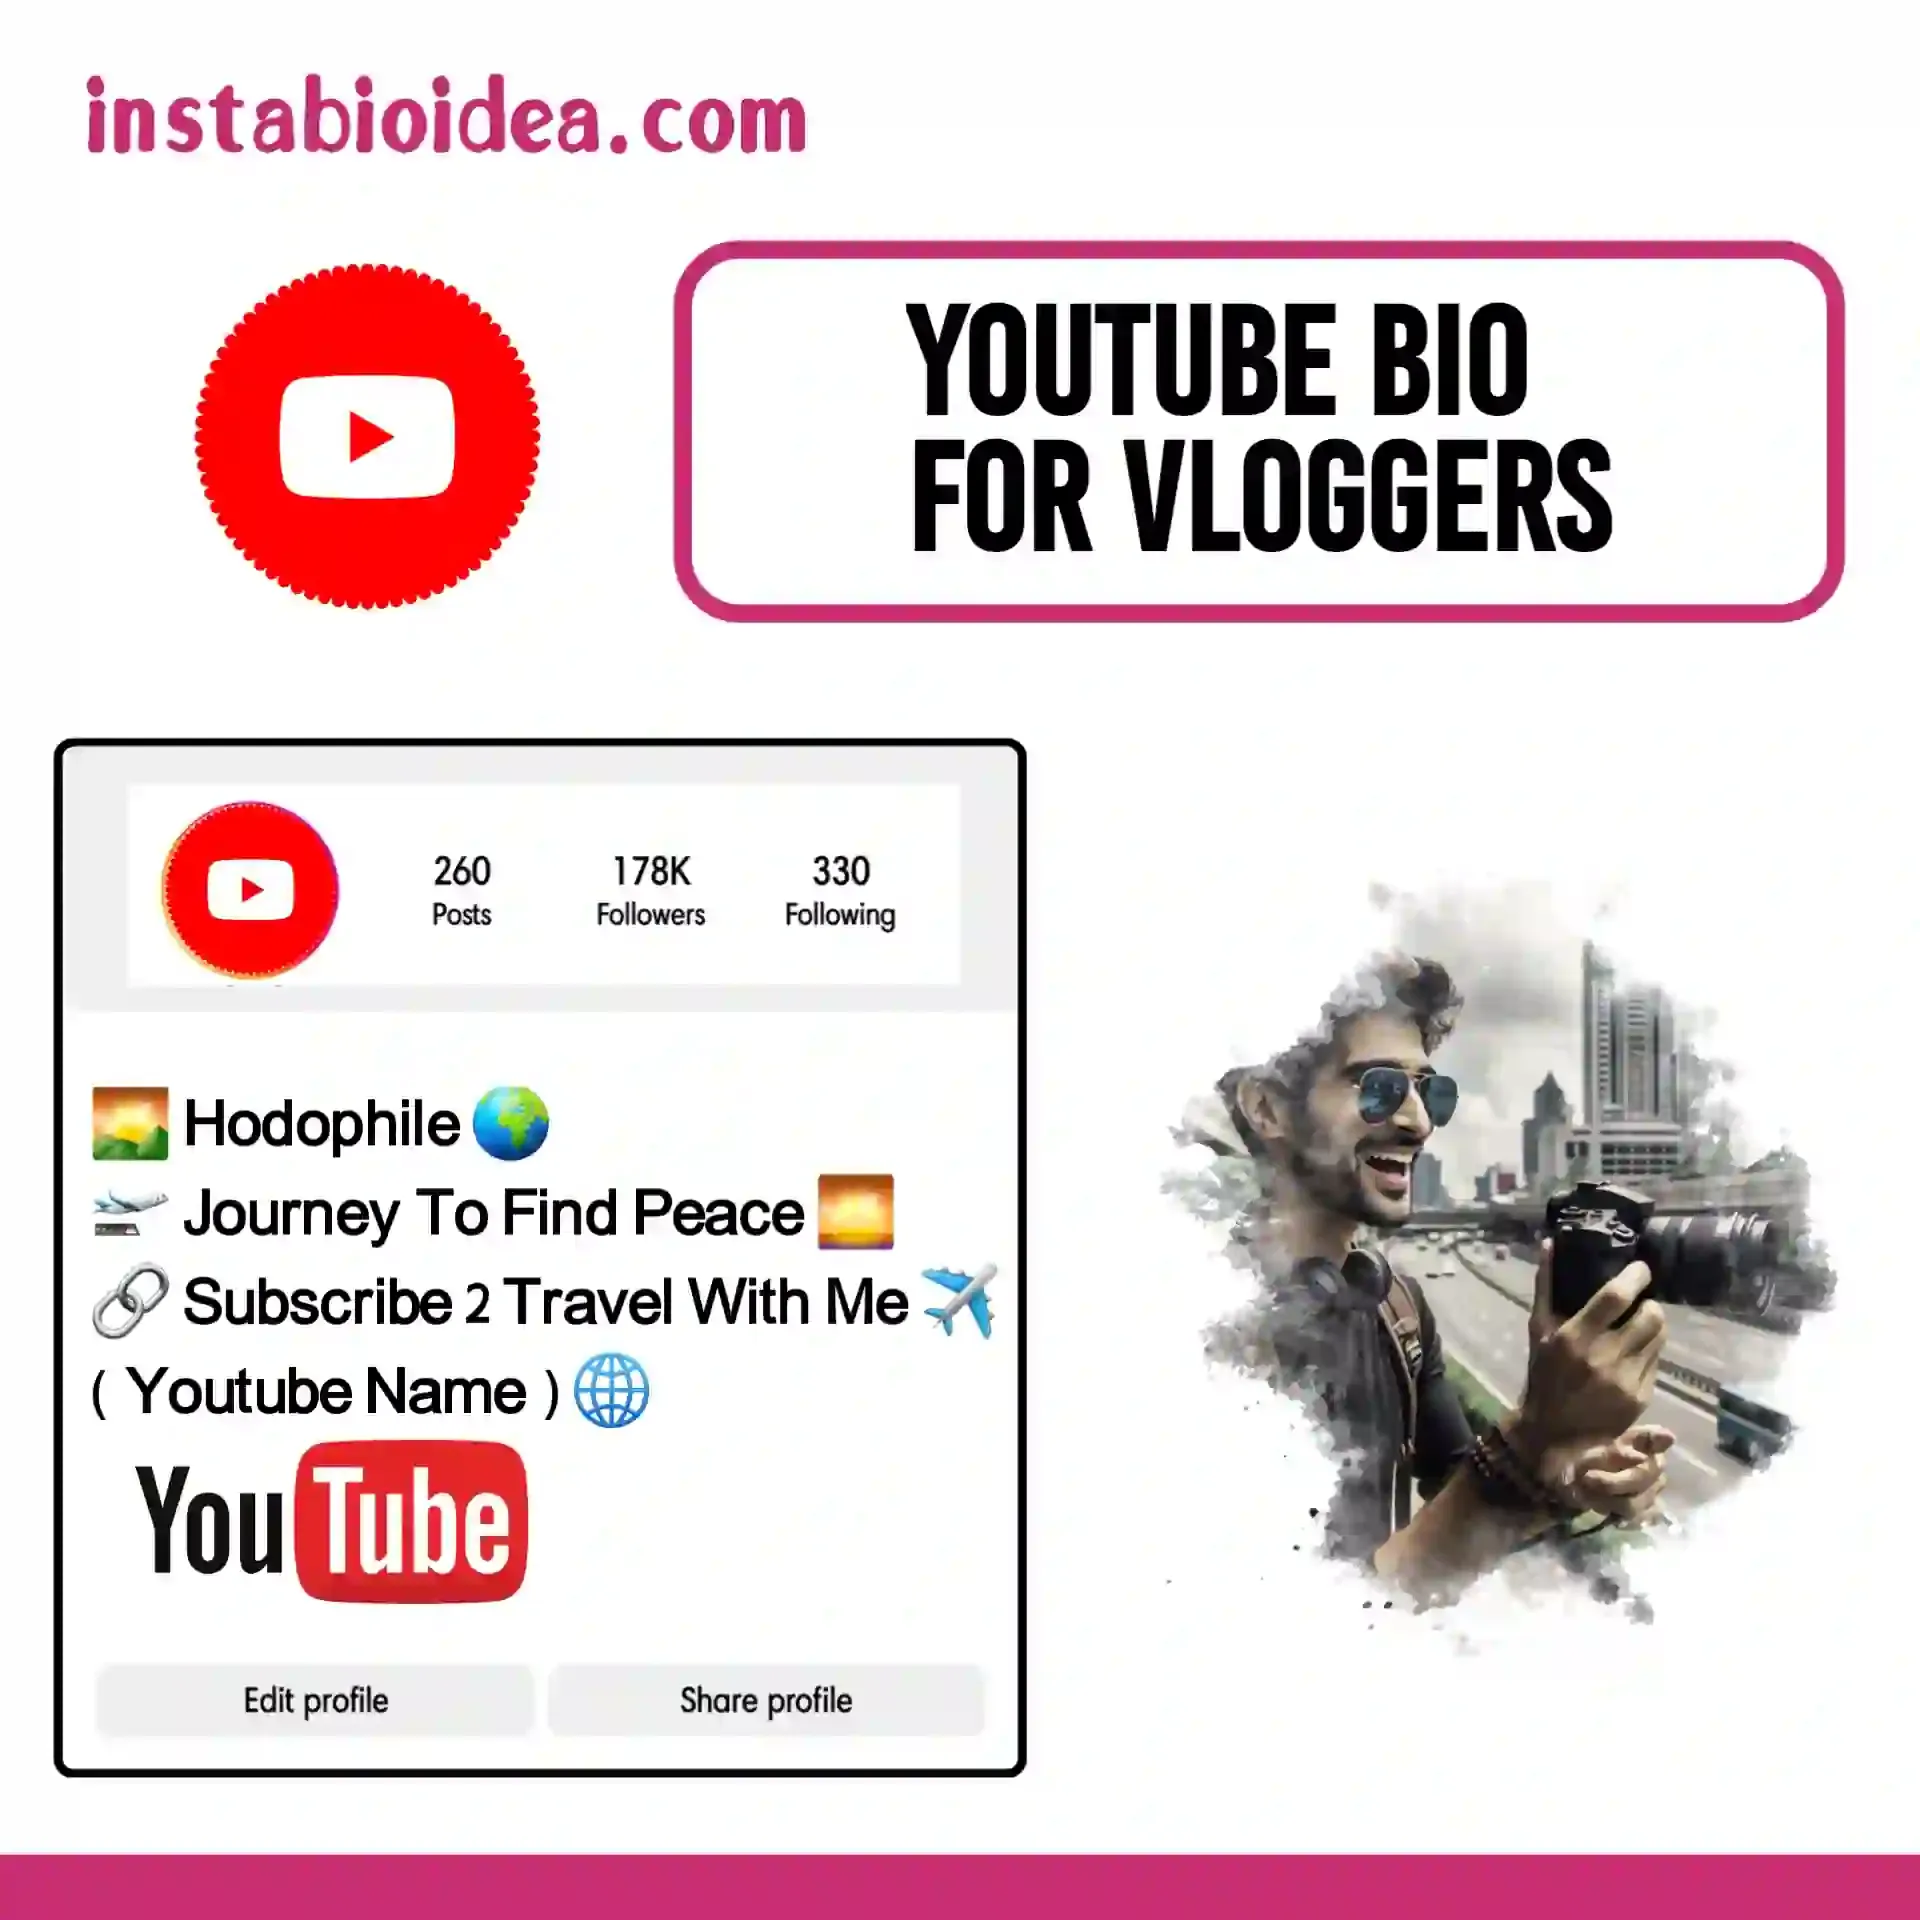 youtube bio for vloggers image